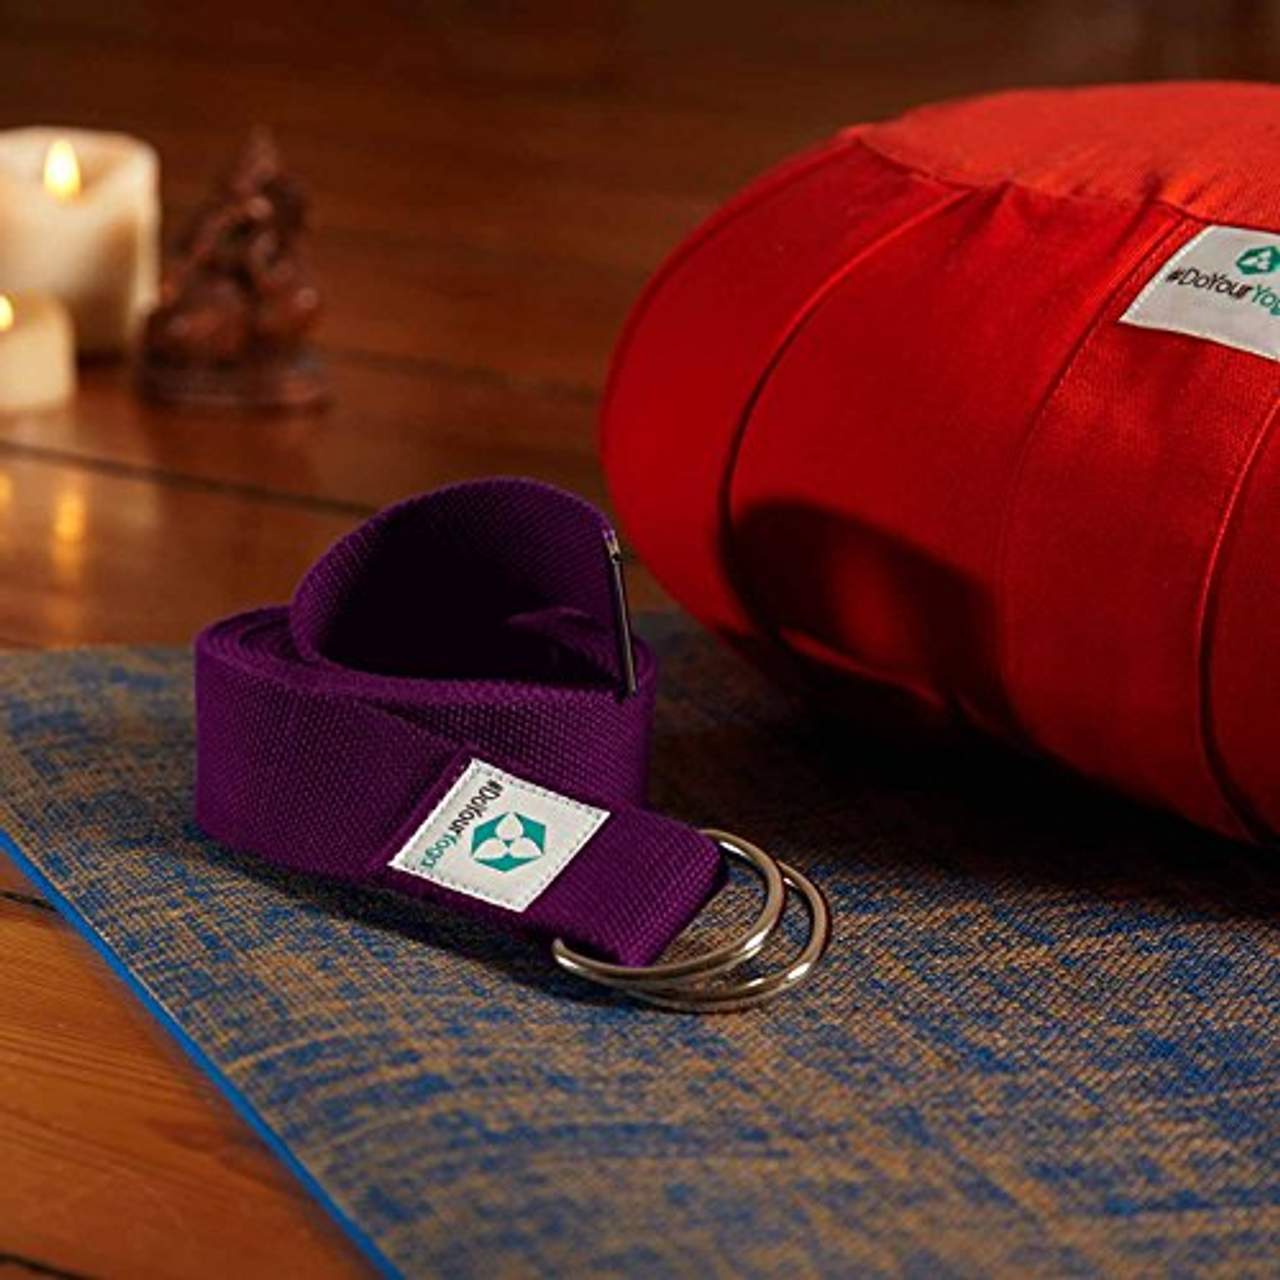 #DoYourYoga Yogagurt »Madira« Yoga-Belt Gurt 100% Baumwolle